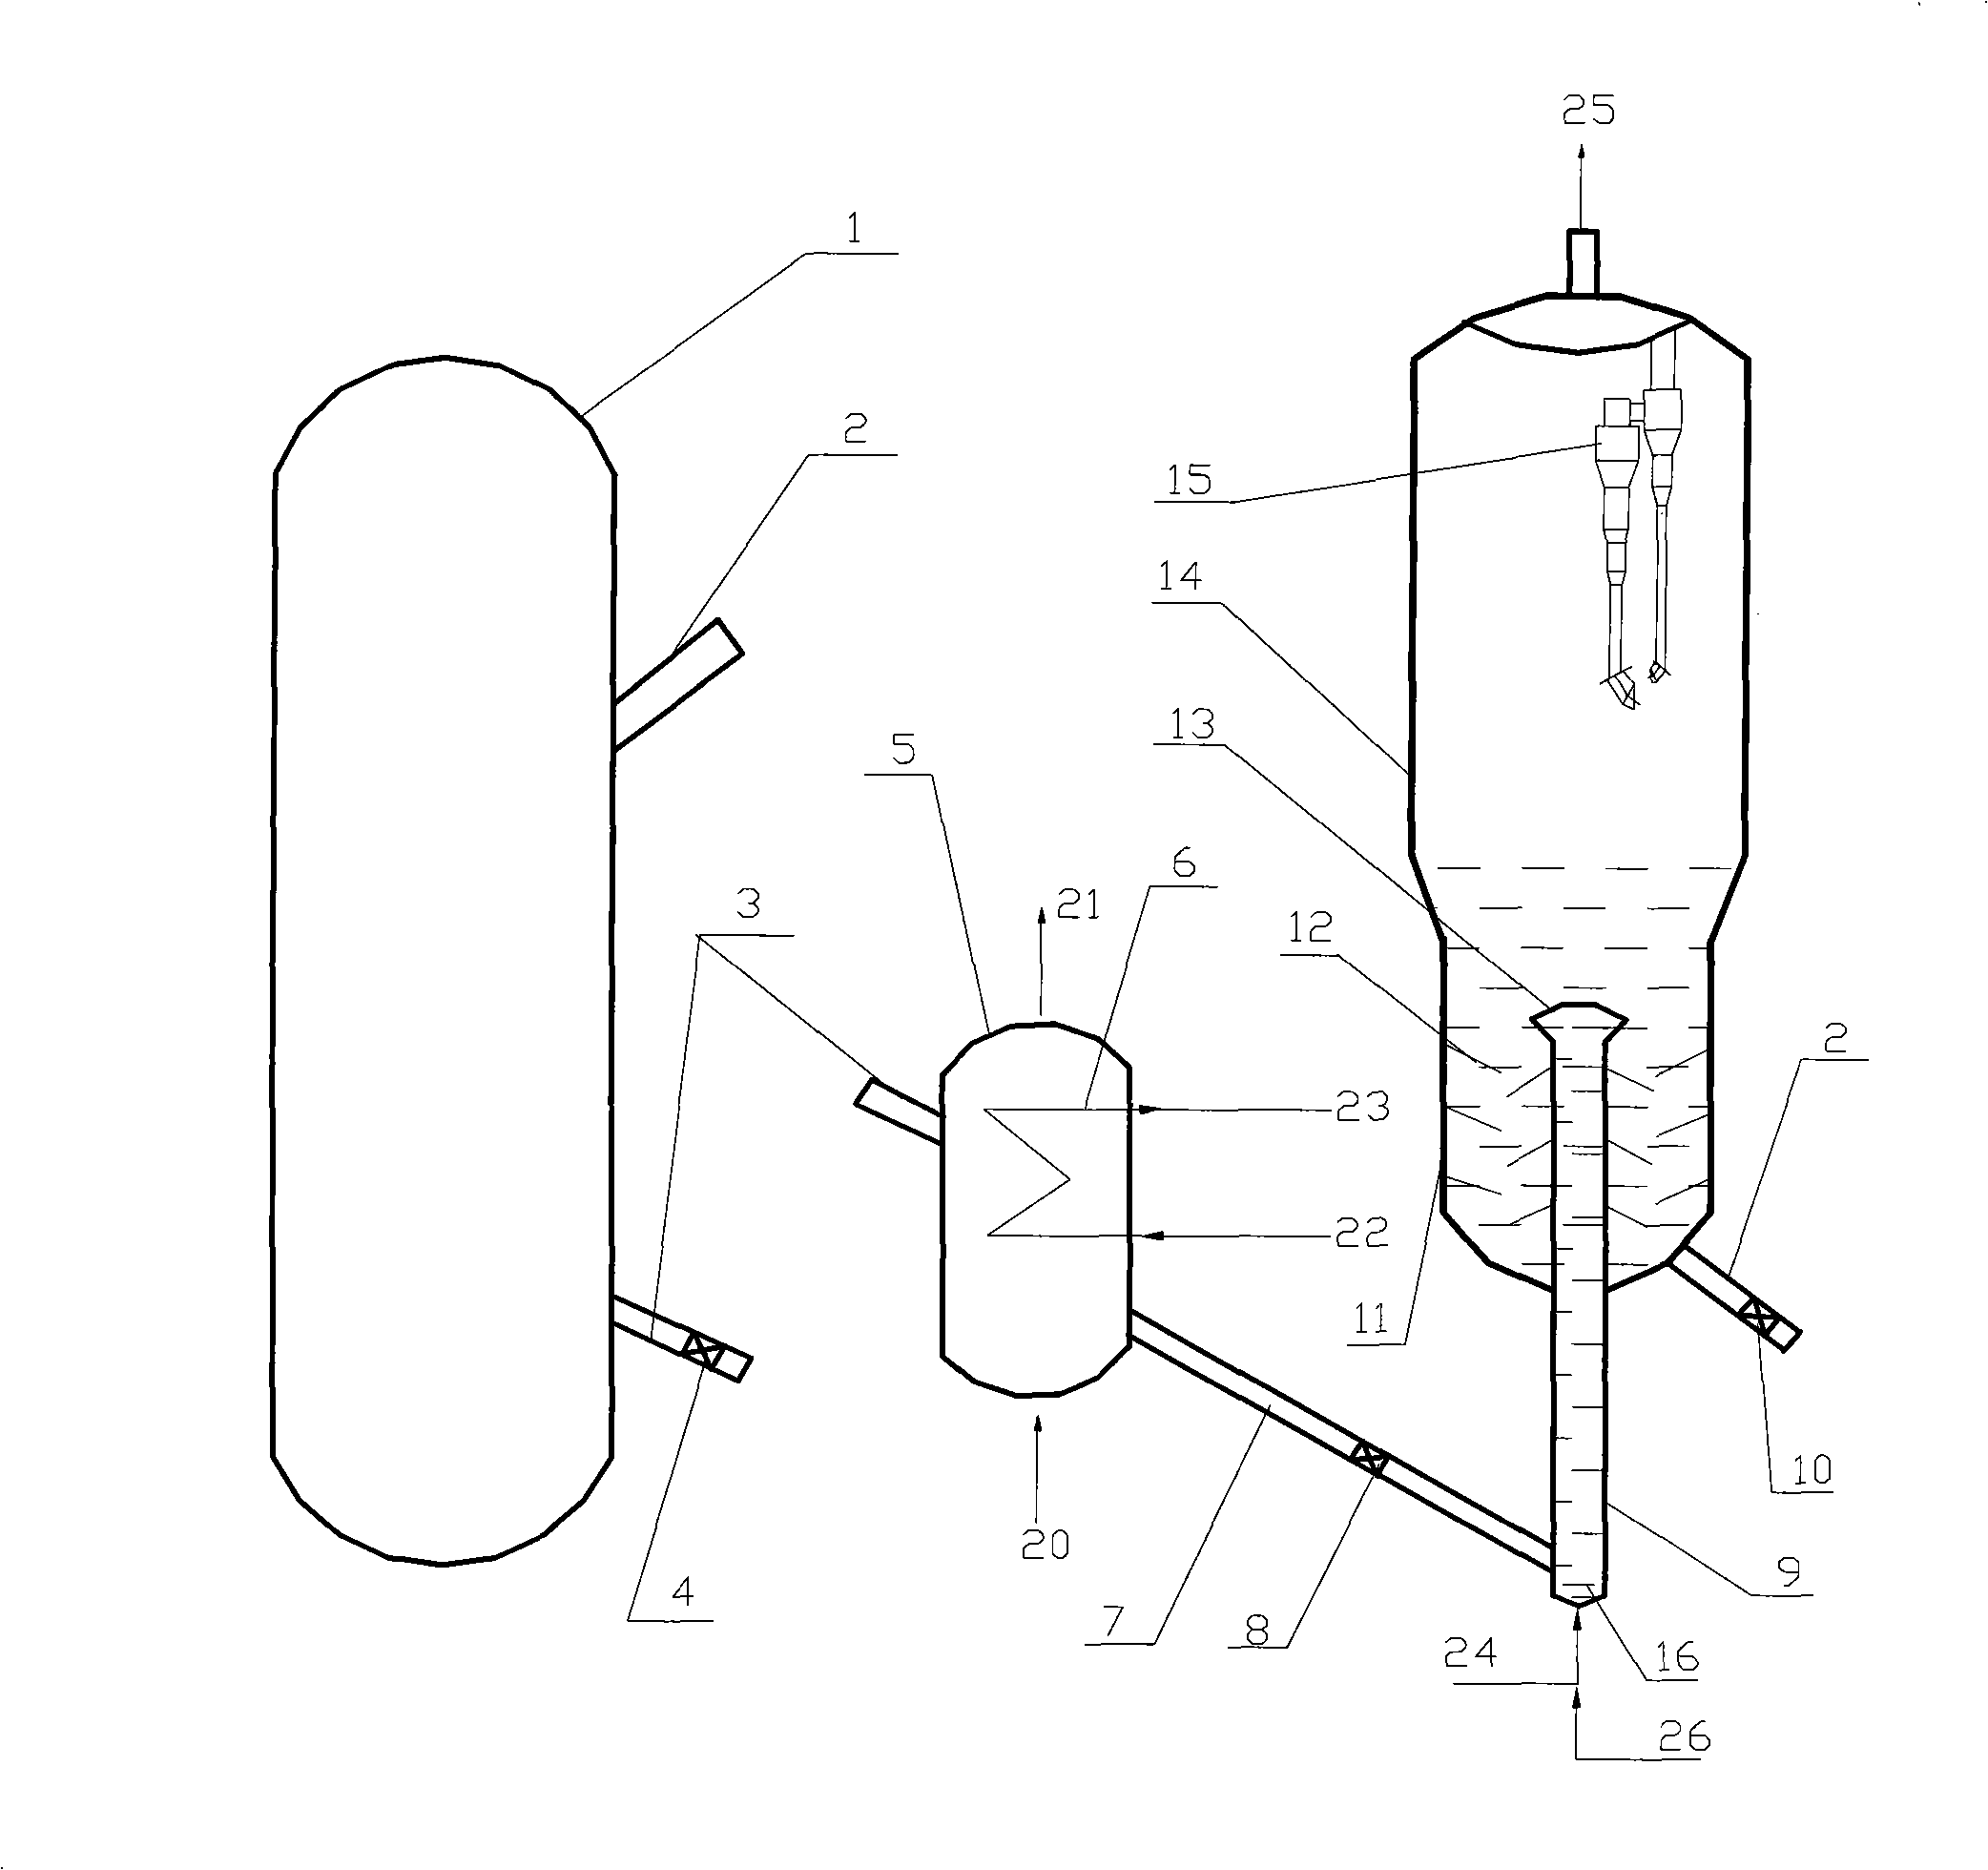 Fluidizer and technique for preparing ethylene by ethanol dehydration